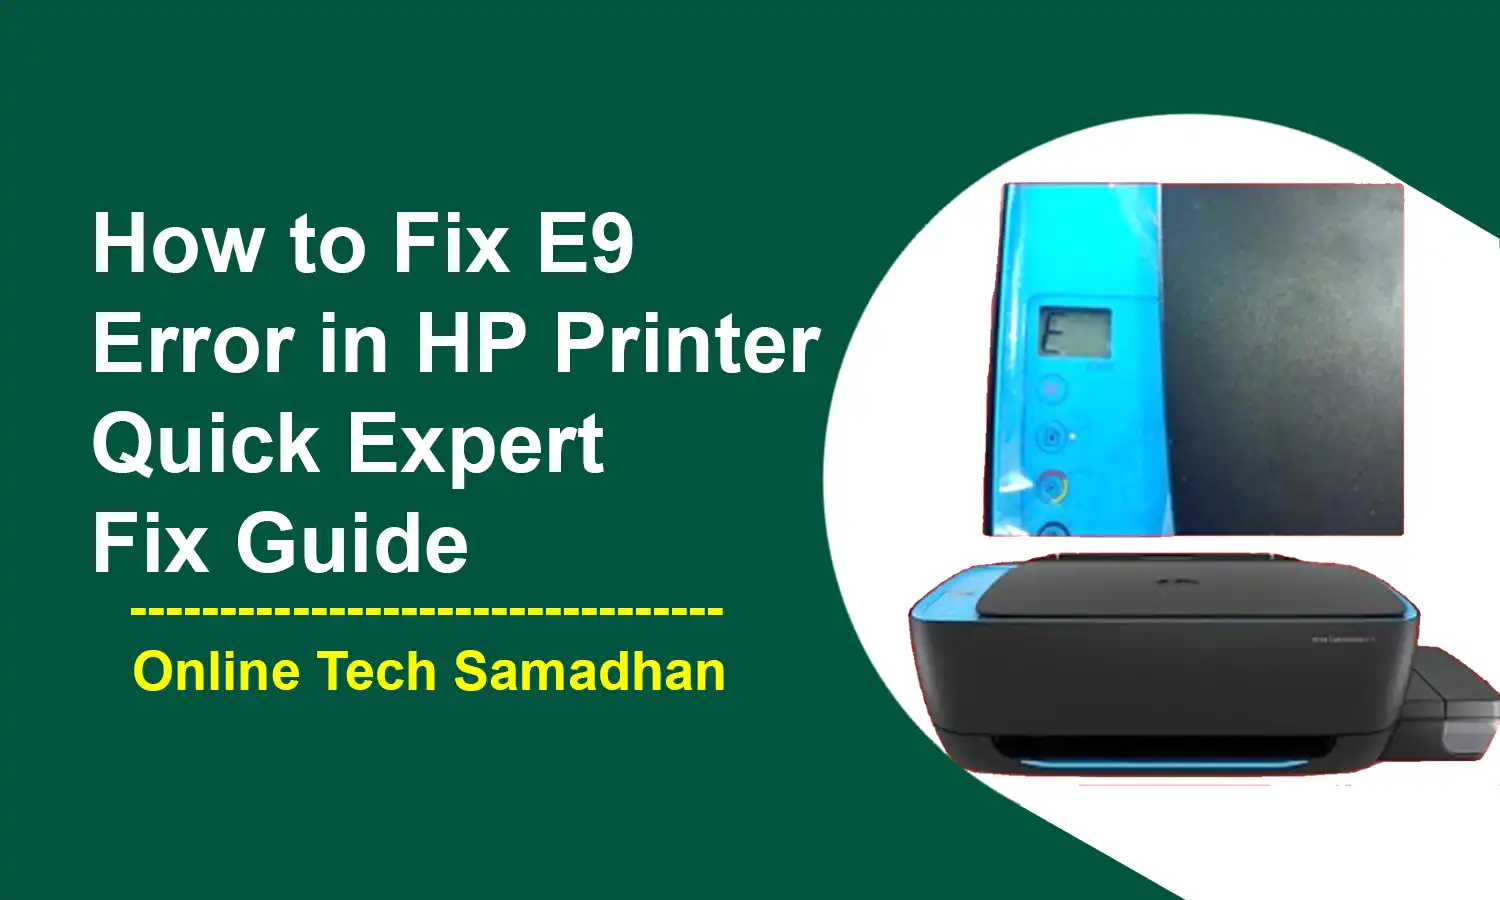 How to Fix E9 Error in HP Printer